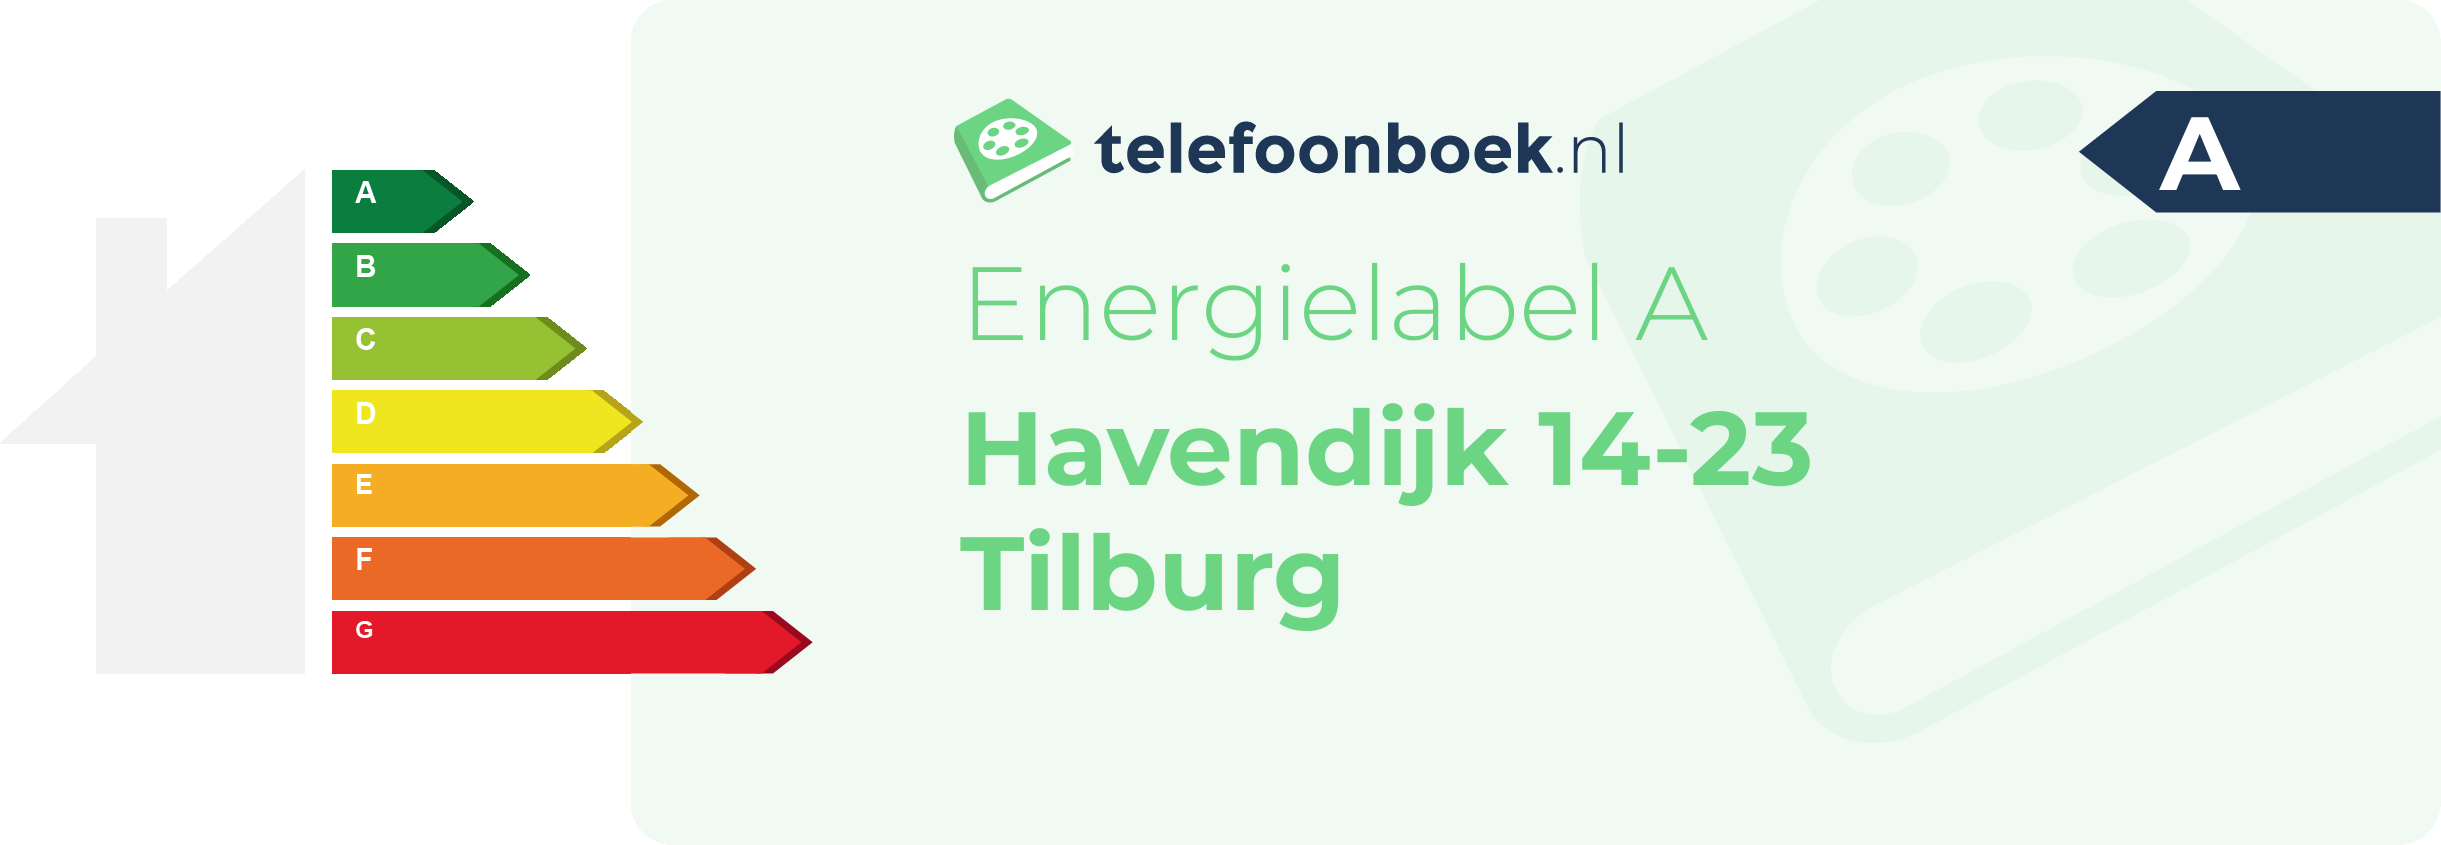 Energielabel Havendijk 14-23 Tilburg